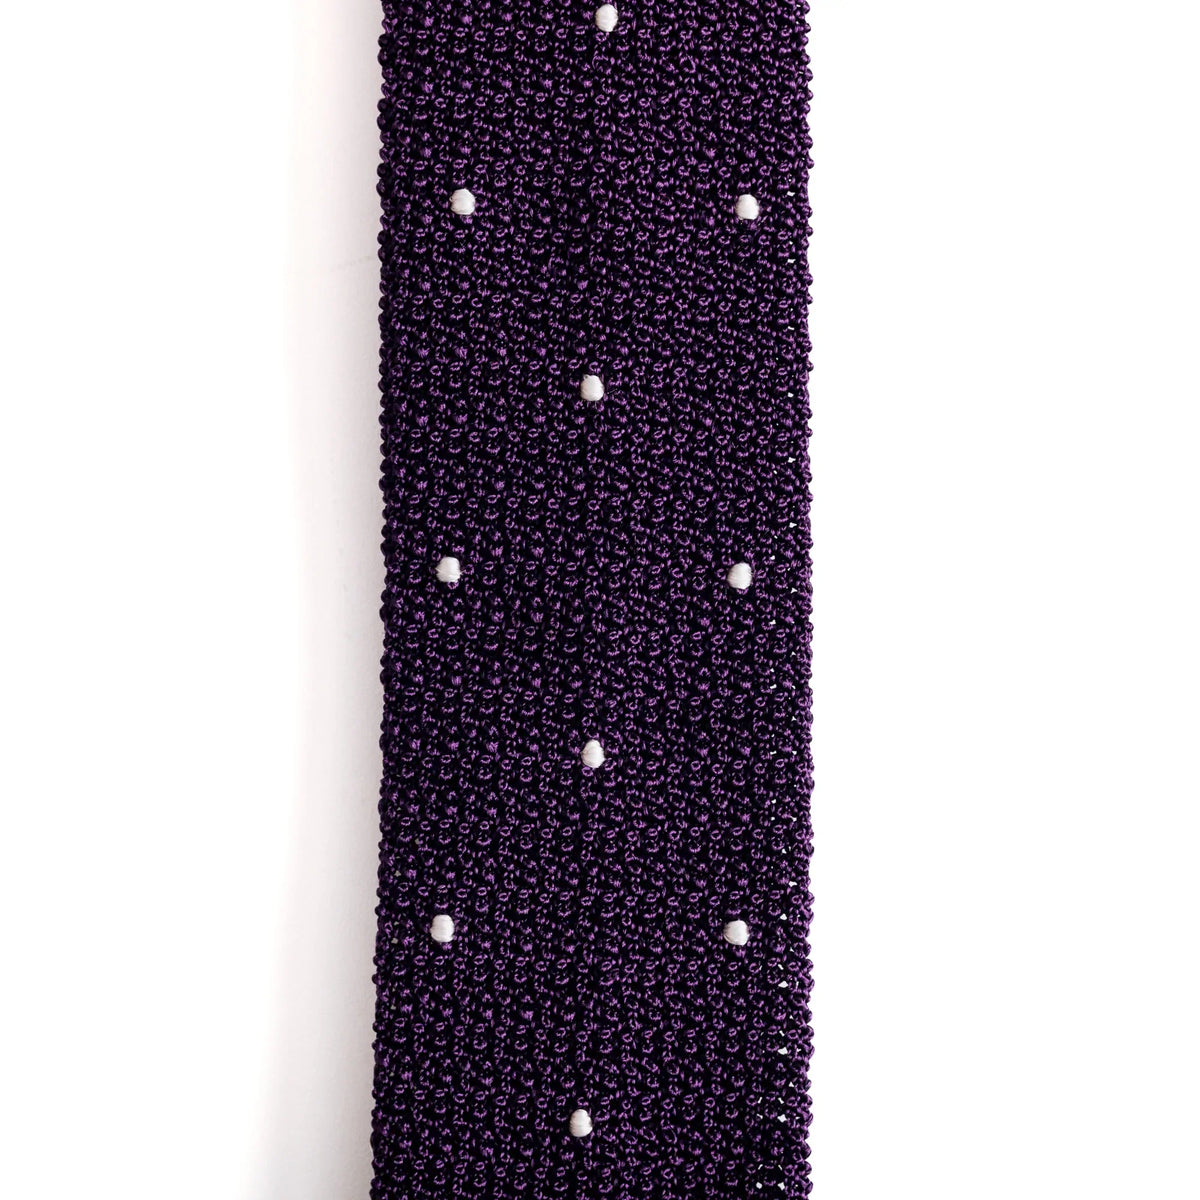 Purple & White Spot Knitted Tie